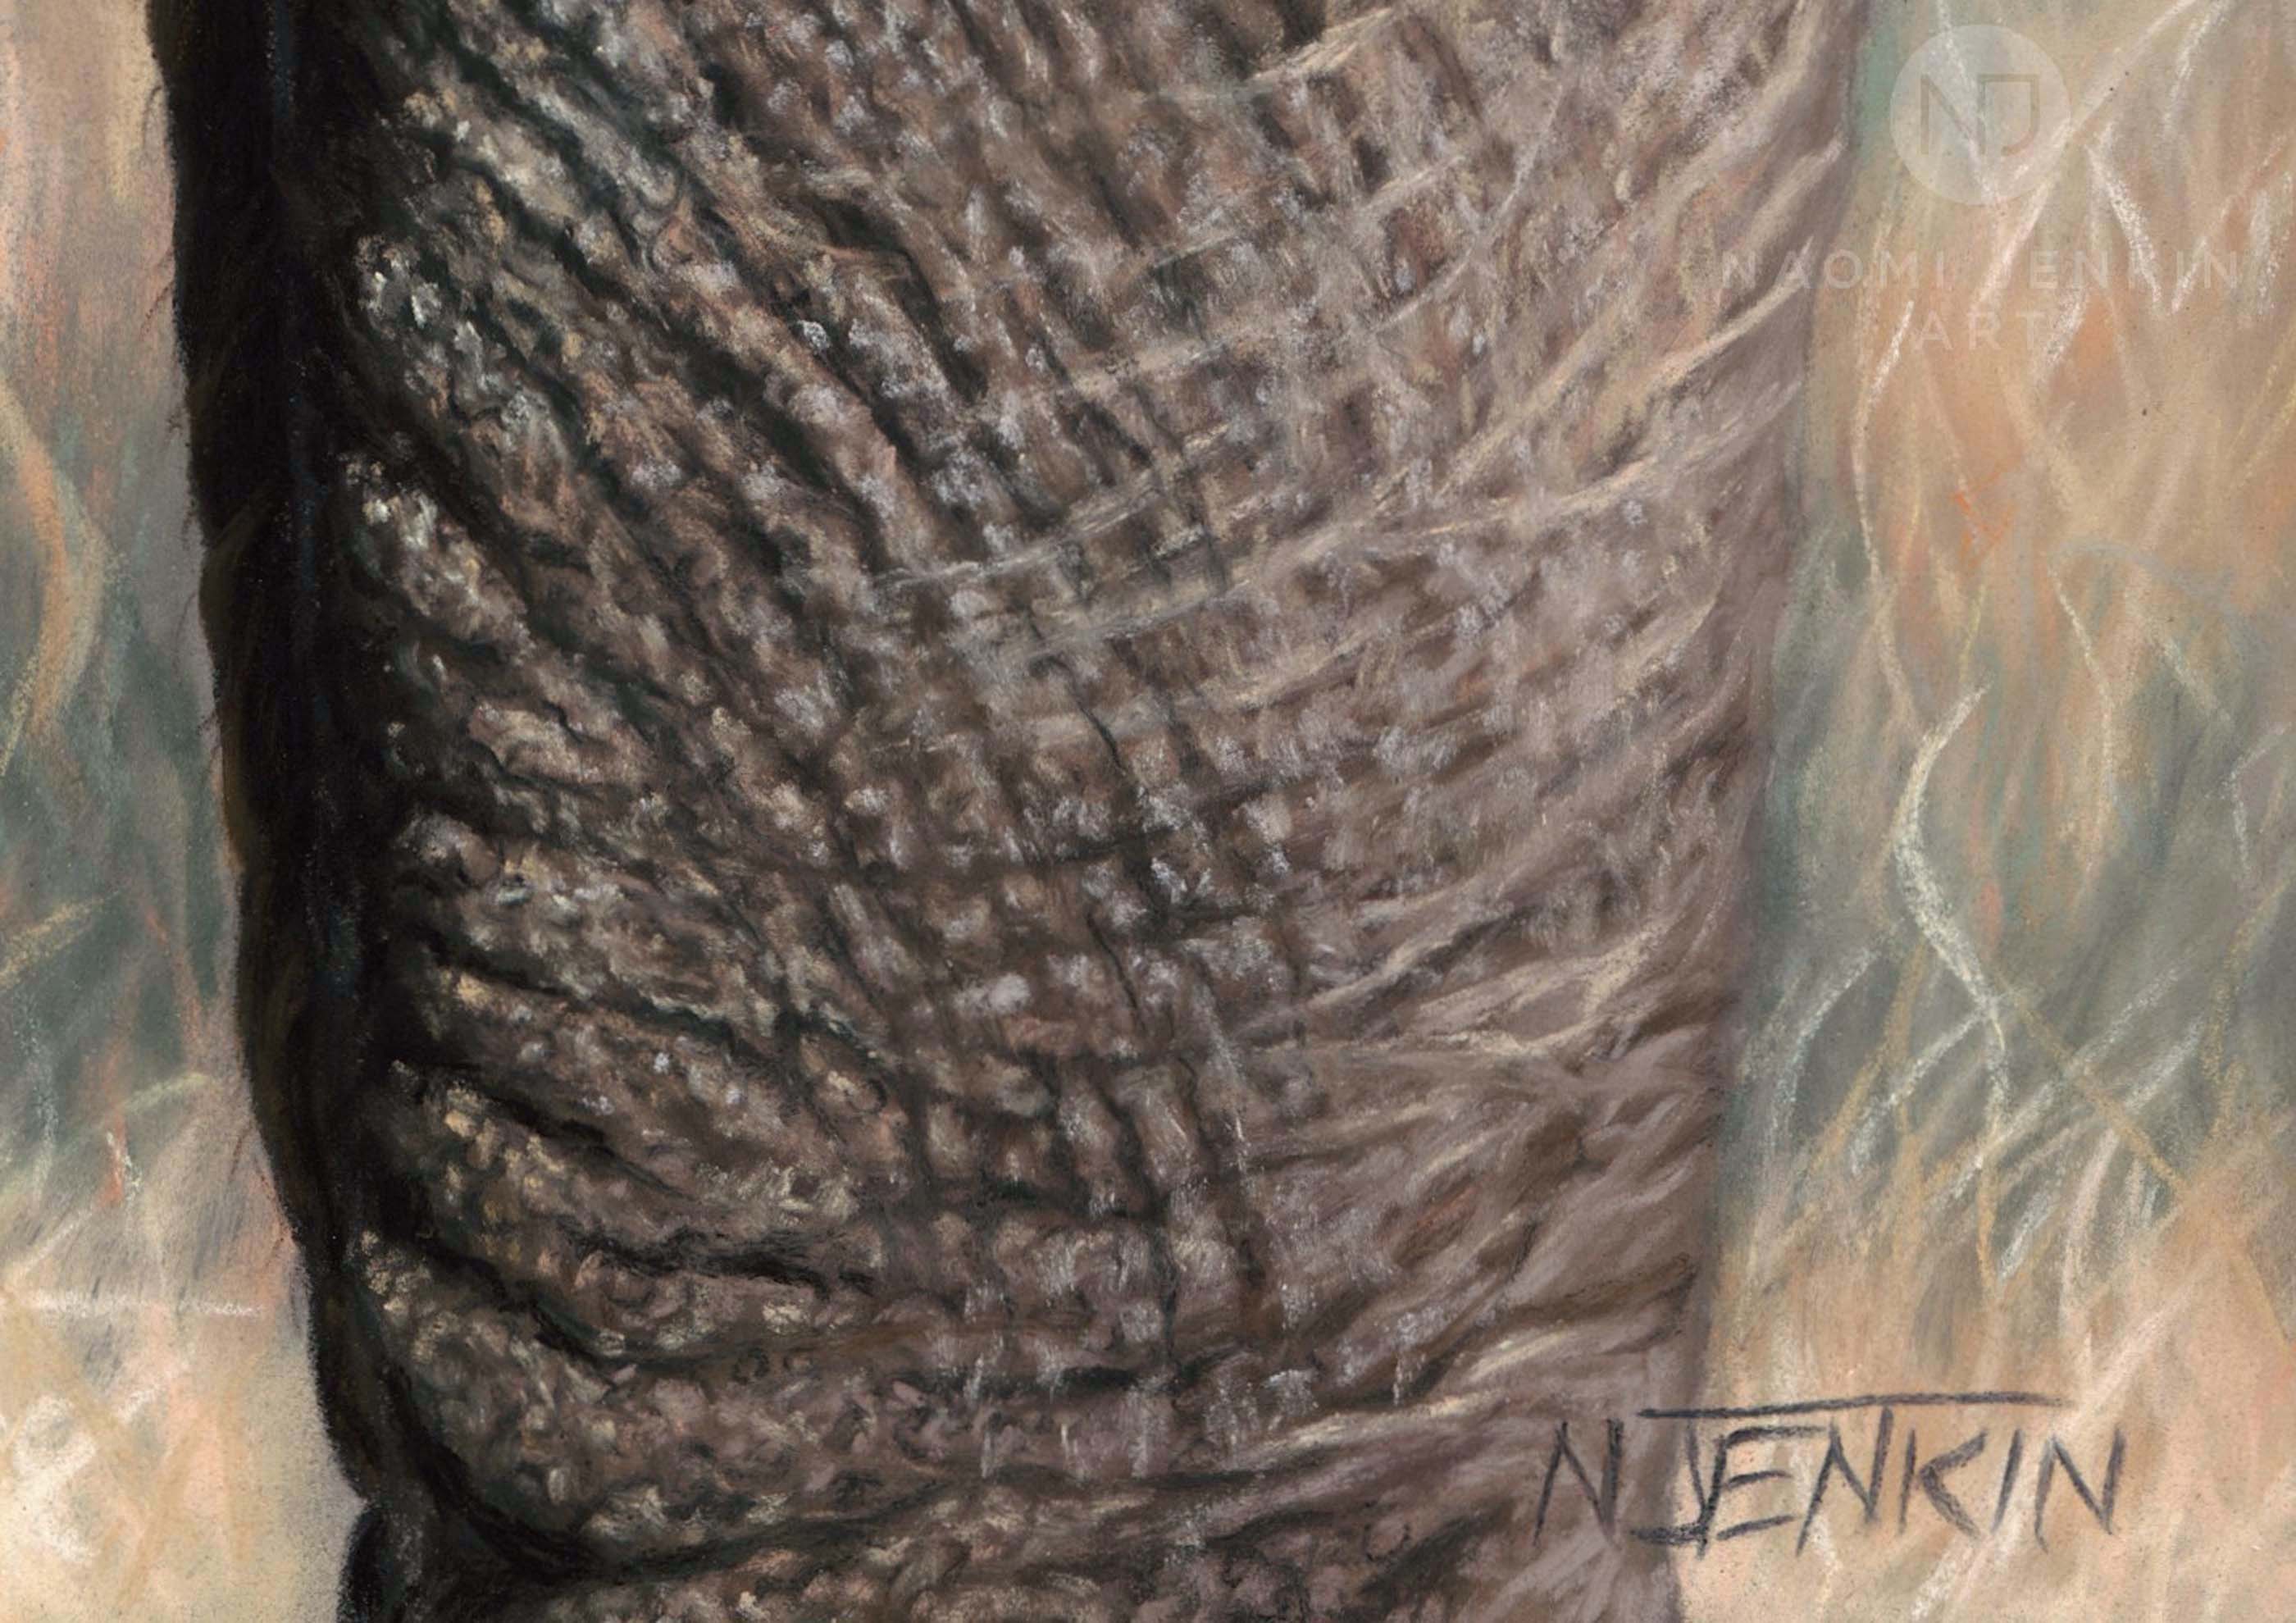 Close up of elephant drawing by wildlife artist Naomi Jenkin. 